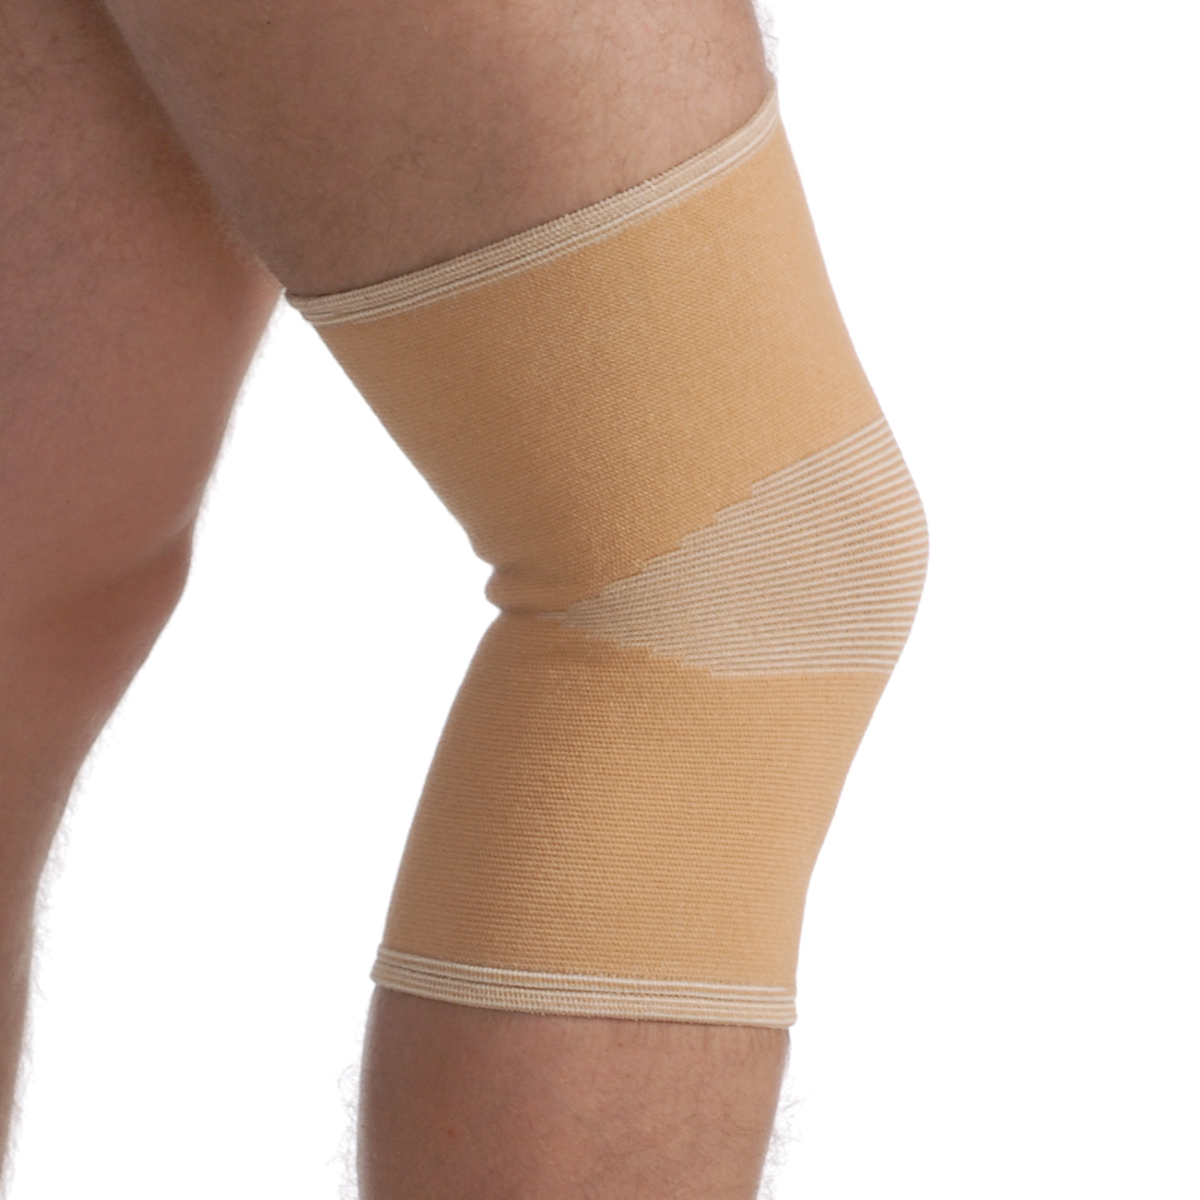 Bandáž kolene elastická béžová, Medtextile, 6002 vel. L